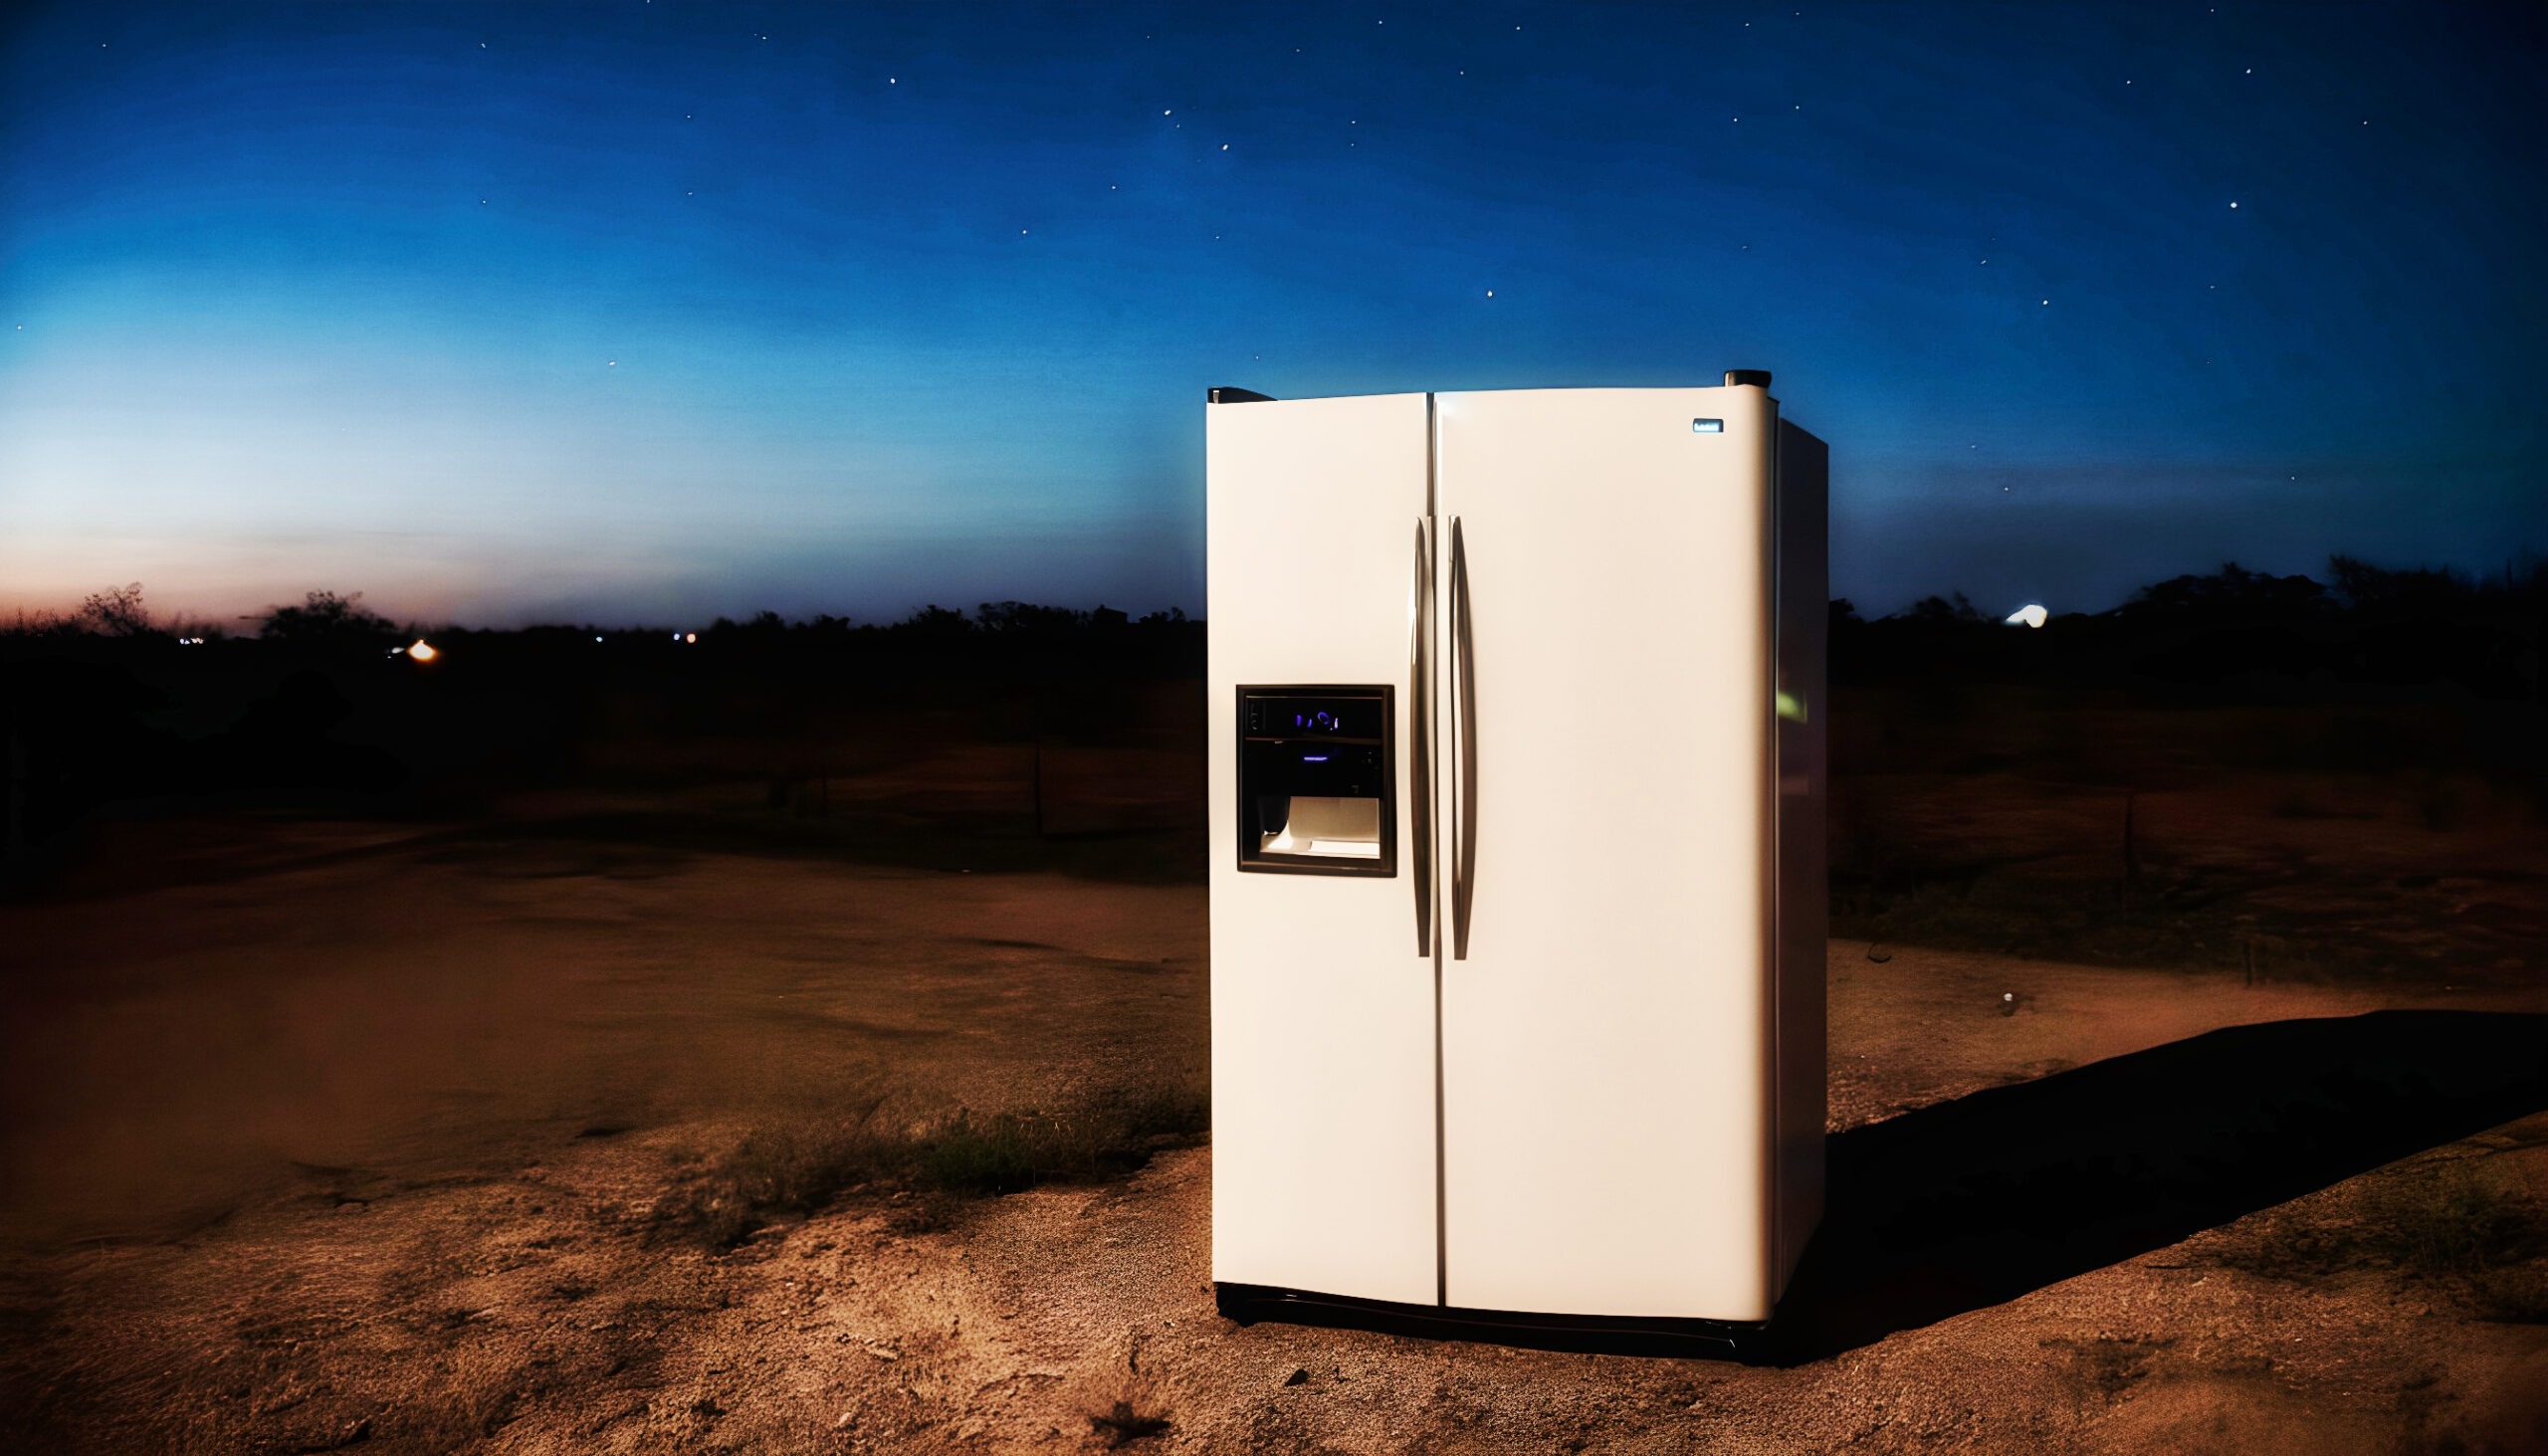 Jonestown's night sky conservation inspires eco-friendly refrigerator repairs in Texas.